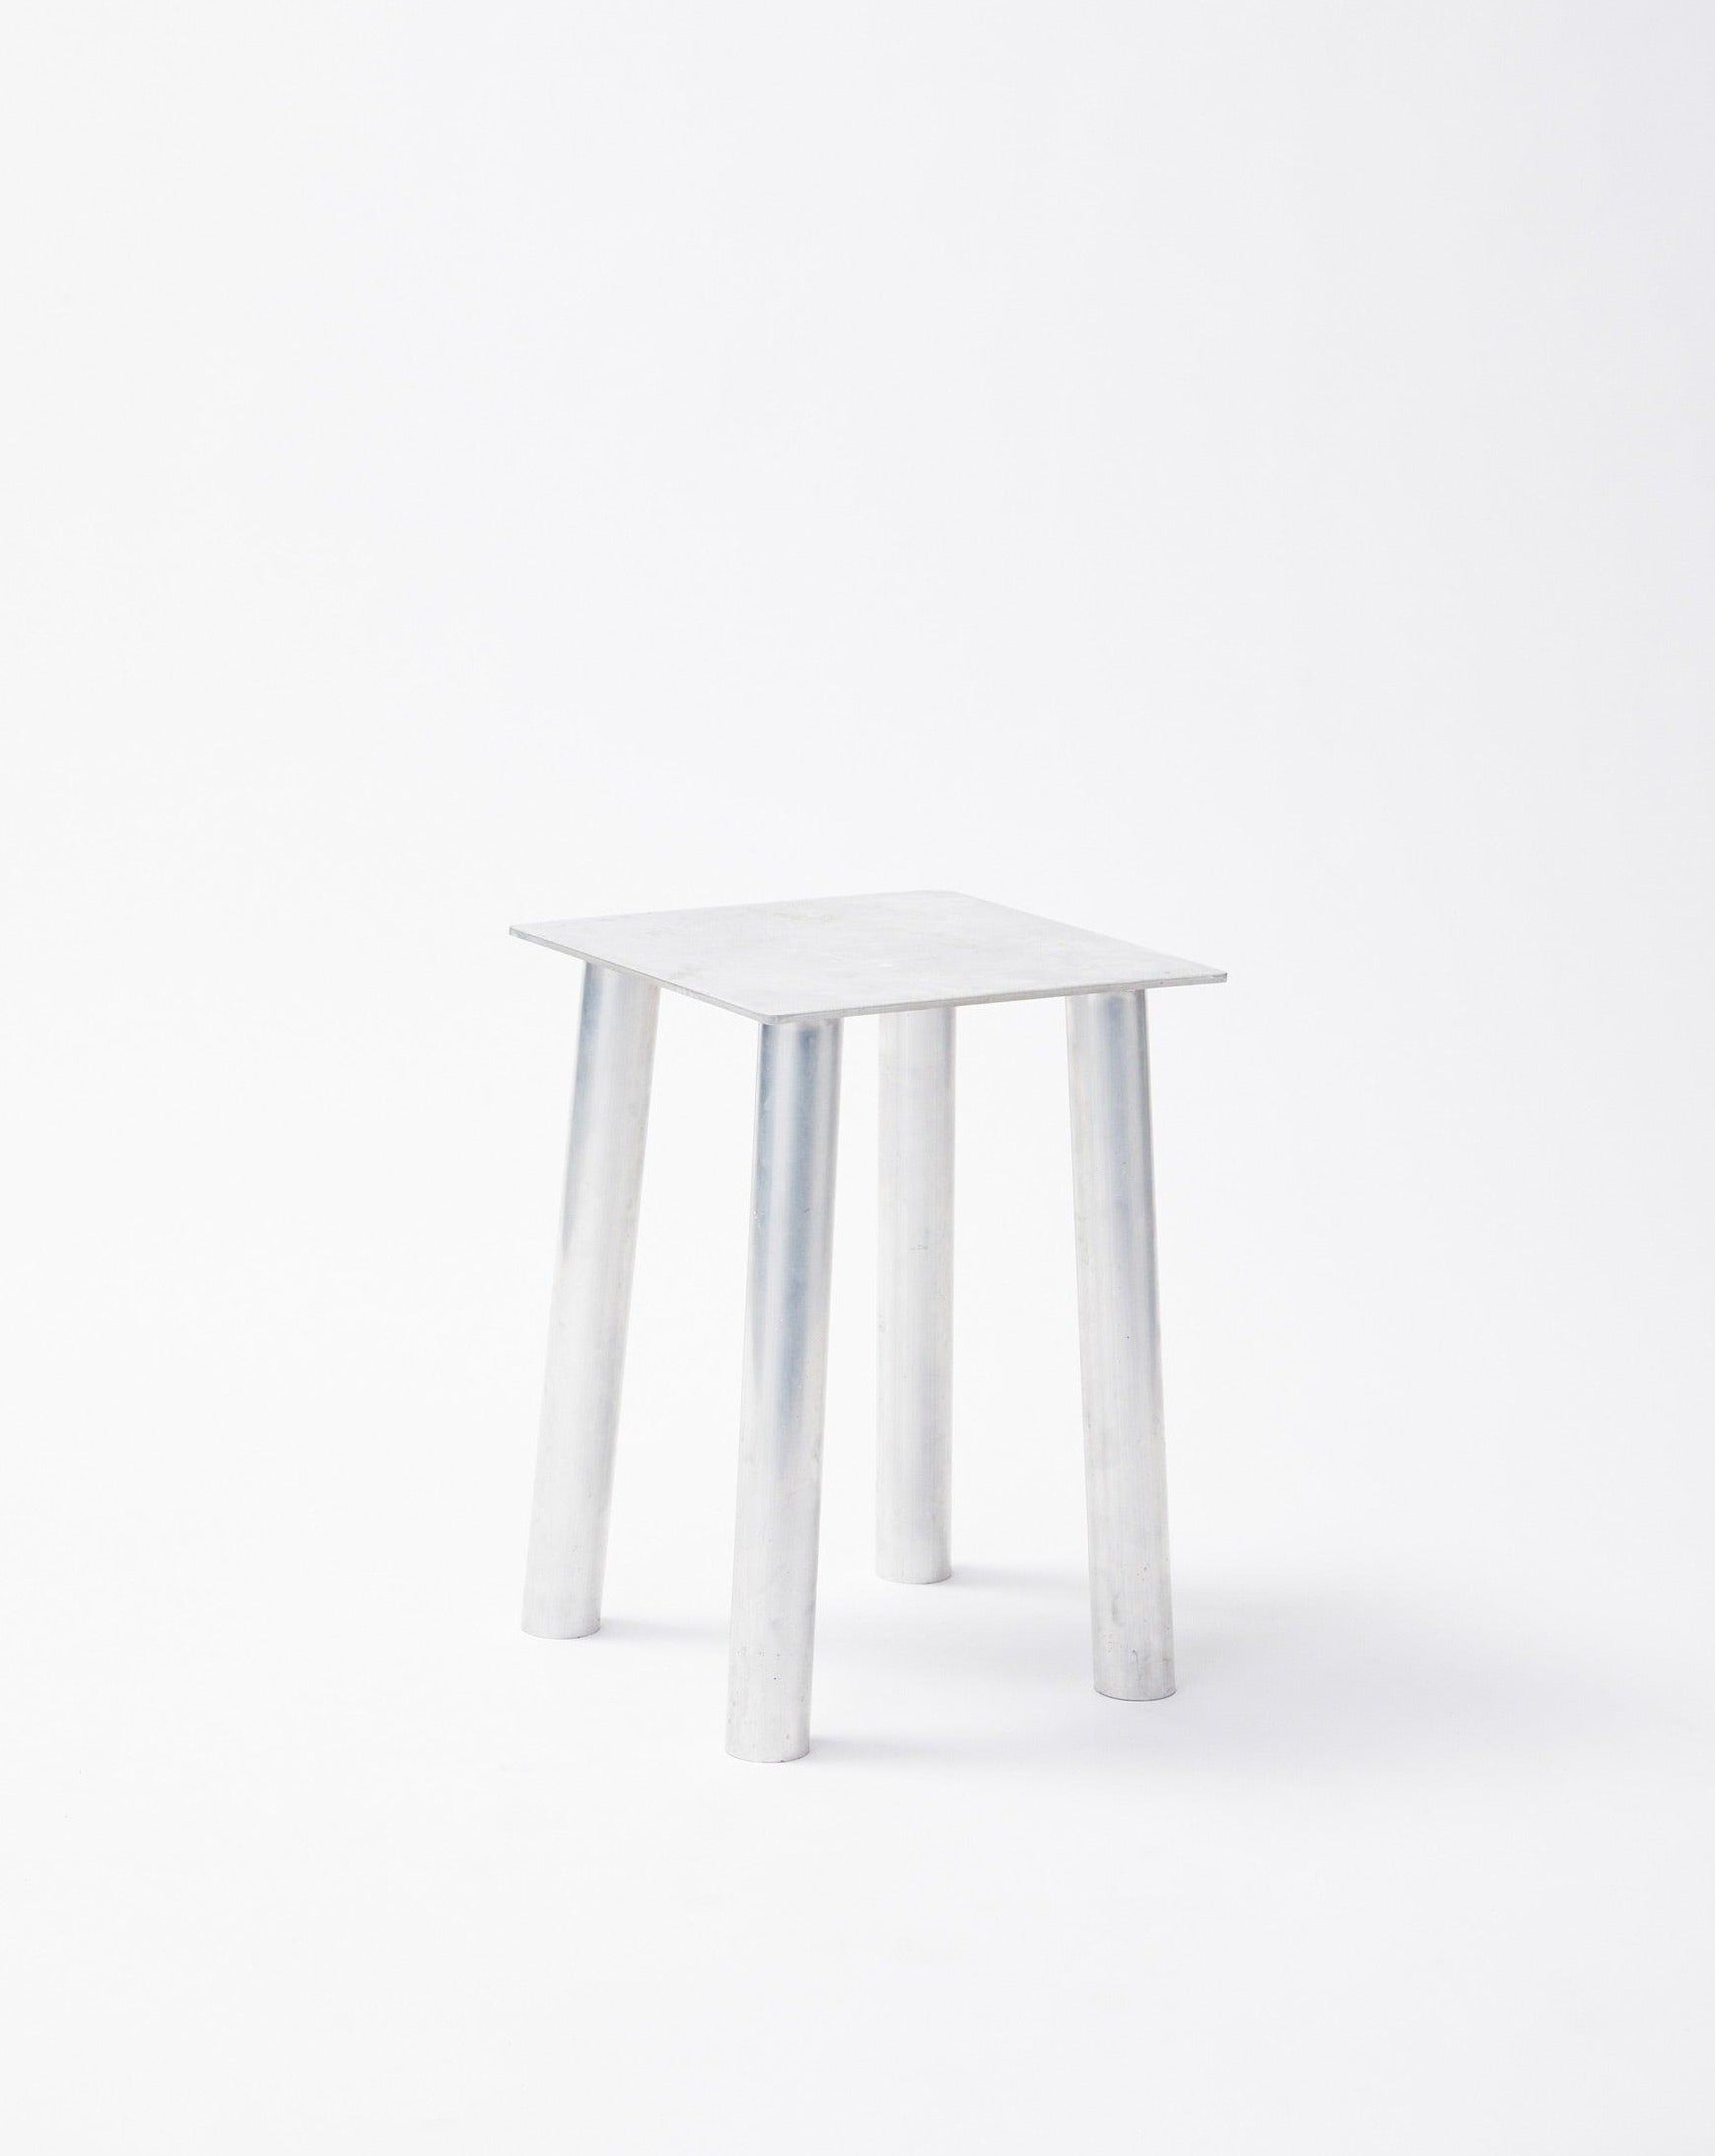 Aluminum decorative stool P-L series lying diagonally to the left